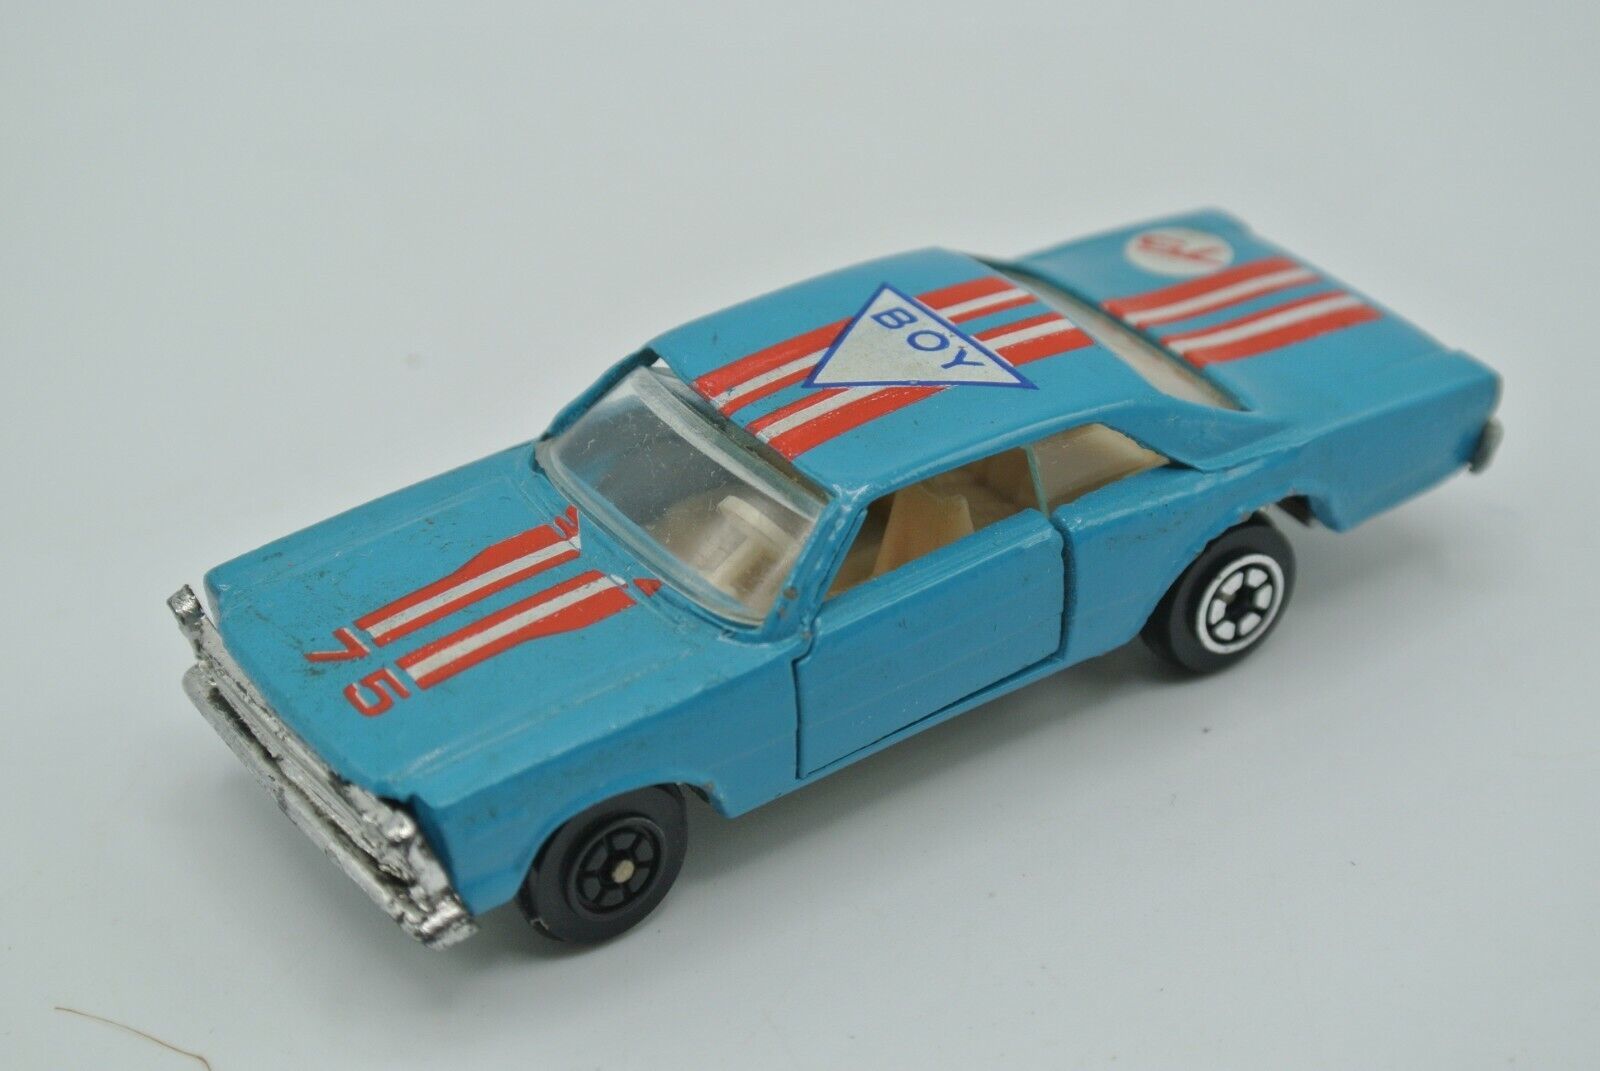 Yatming Blue Boy No. 1075 Ford Galaxie 1:64 #75 Diecast Toy Car China Vtg - $14.50